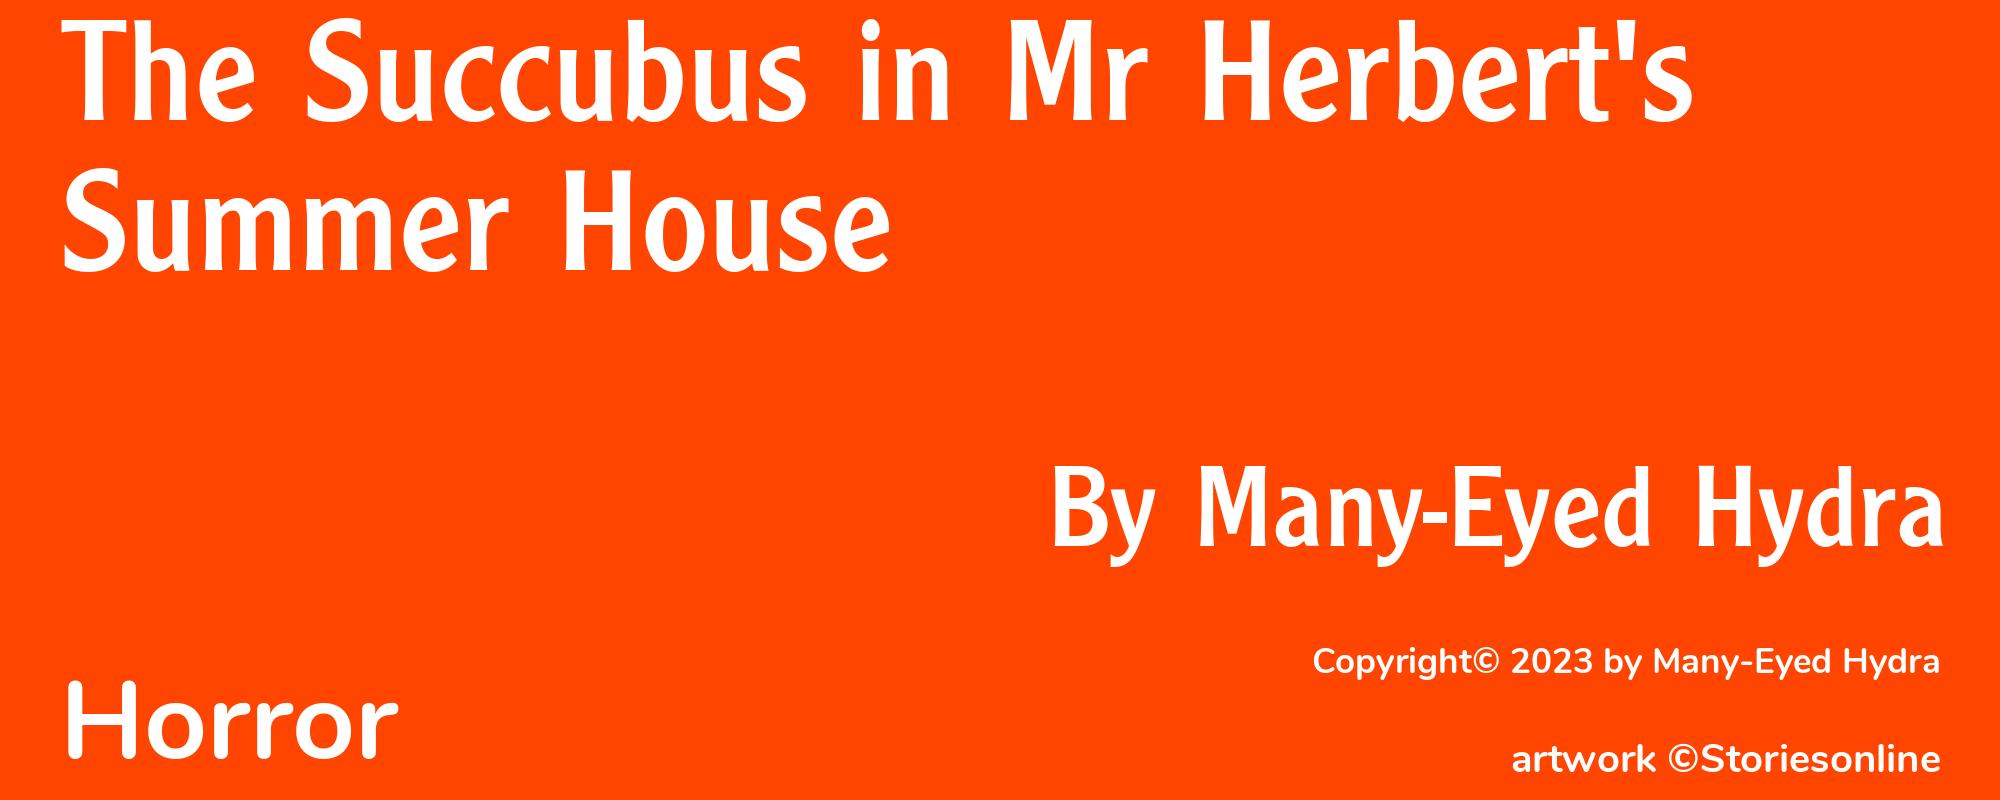 The Succubus in Mr Herbert's Summer House - Cover